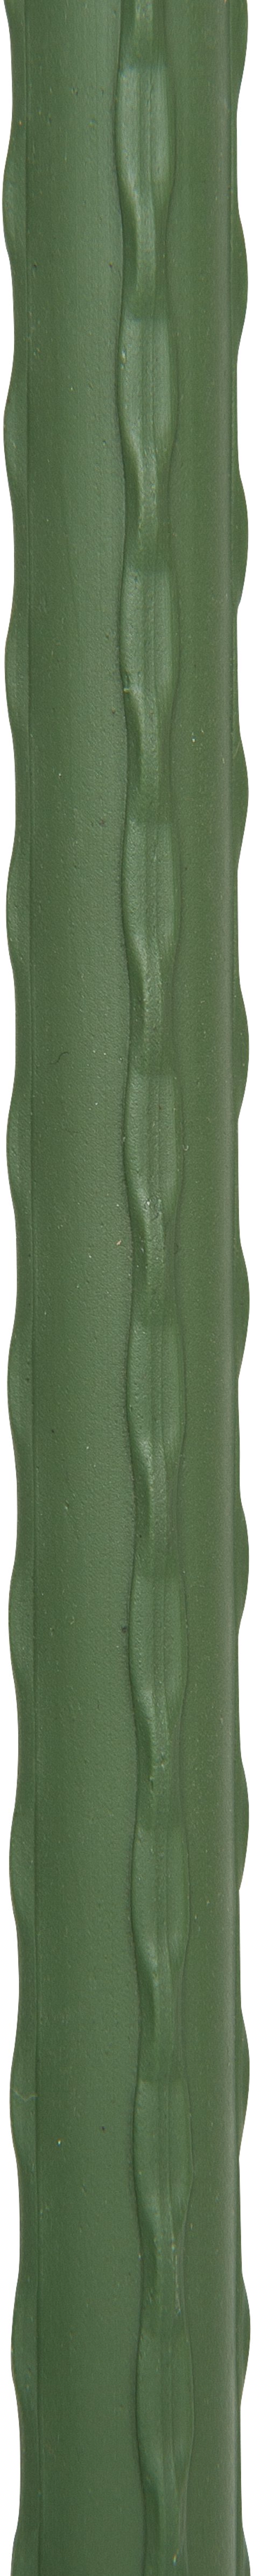 WINDHAGER Pflanzstab 11 mm x 150 cm, grün